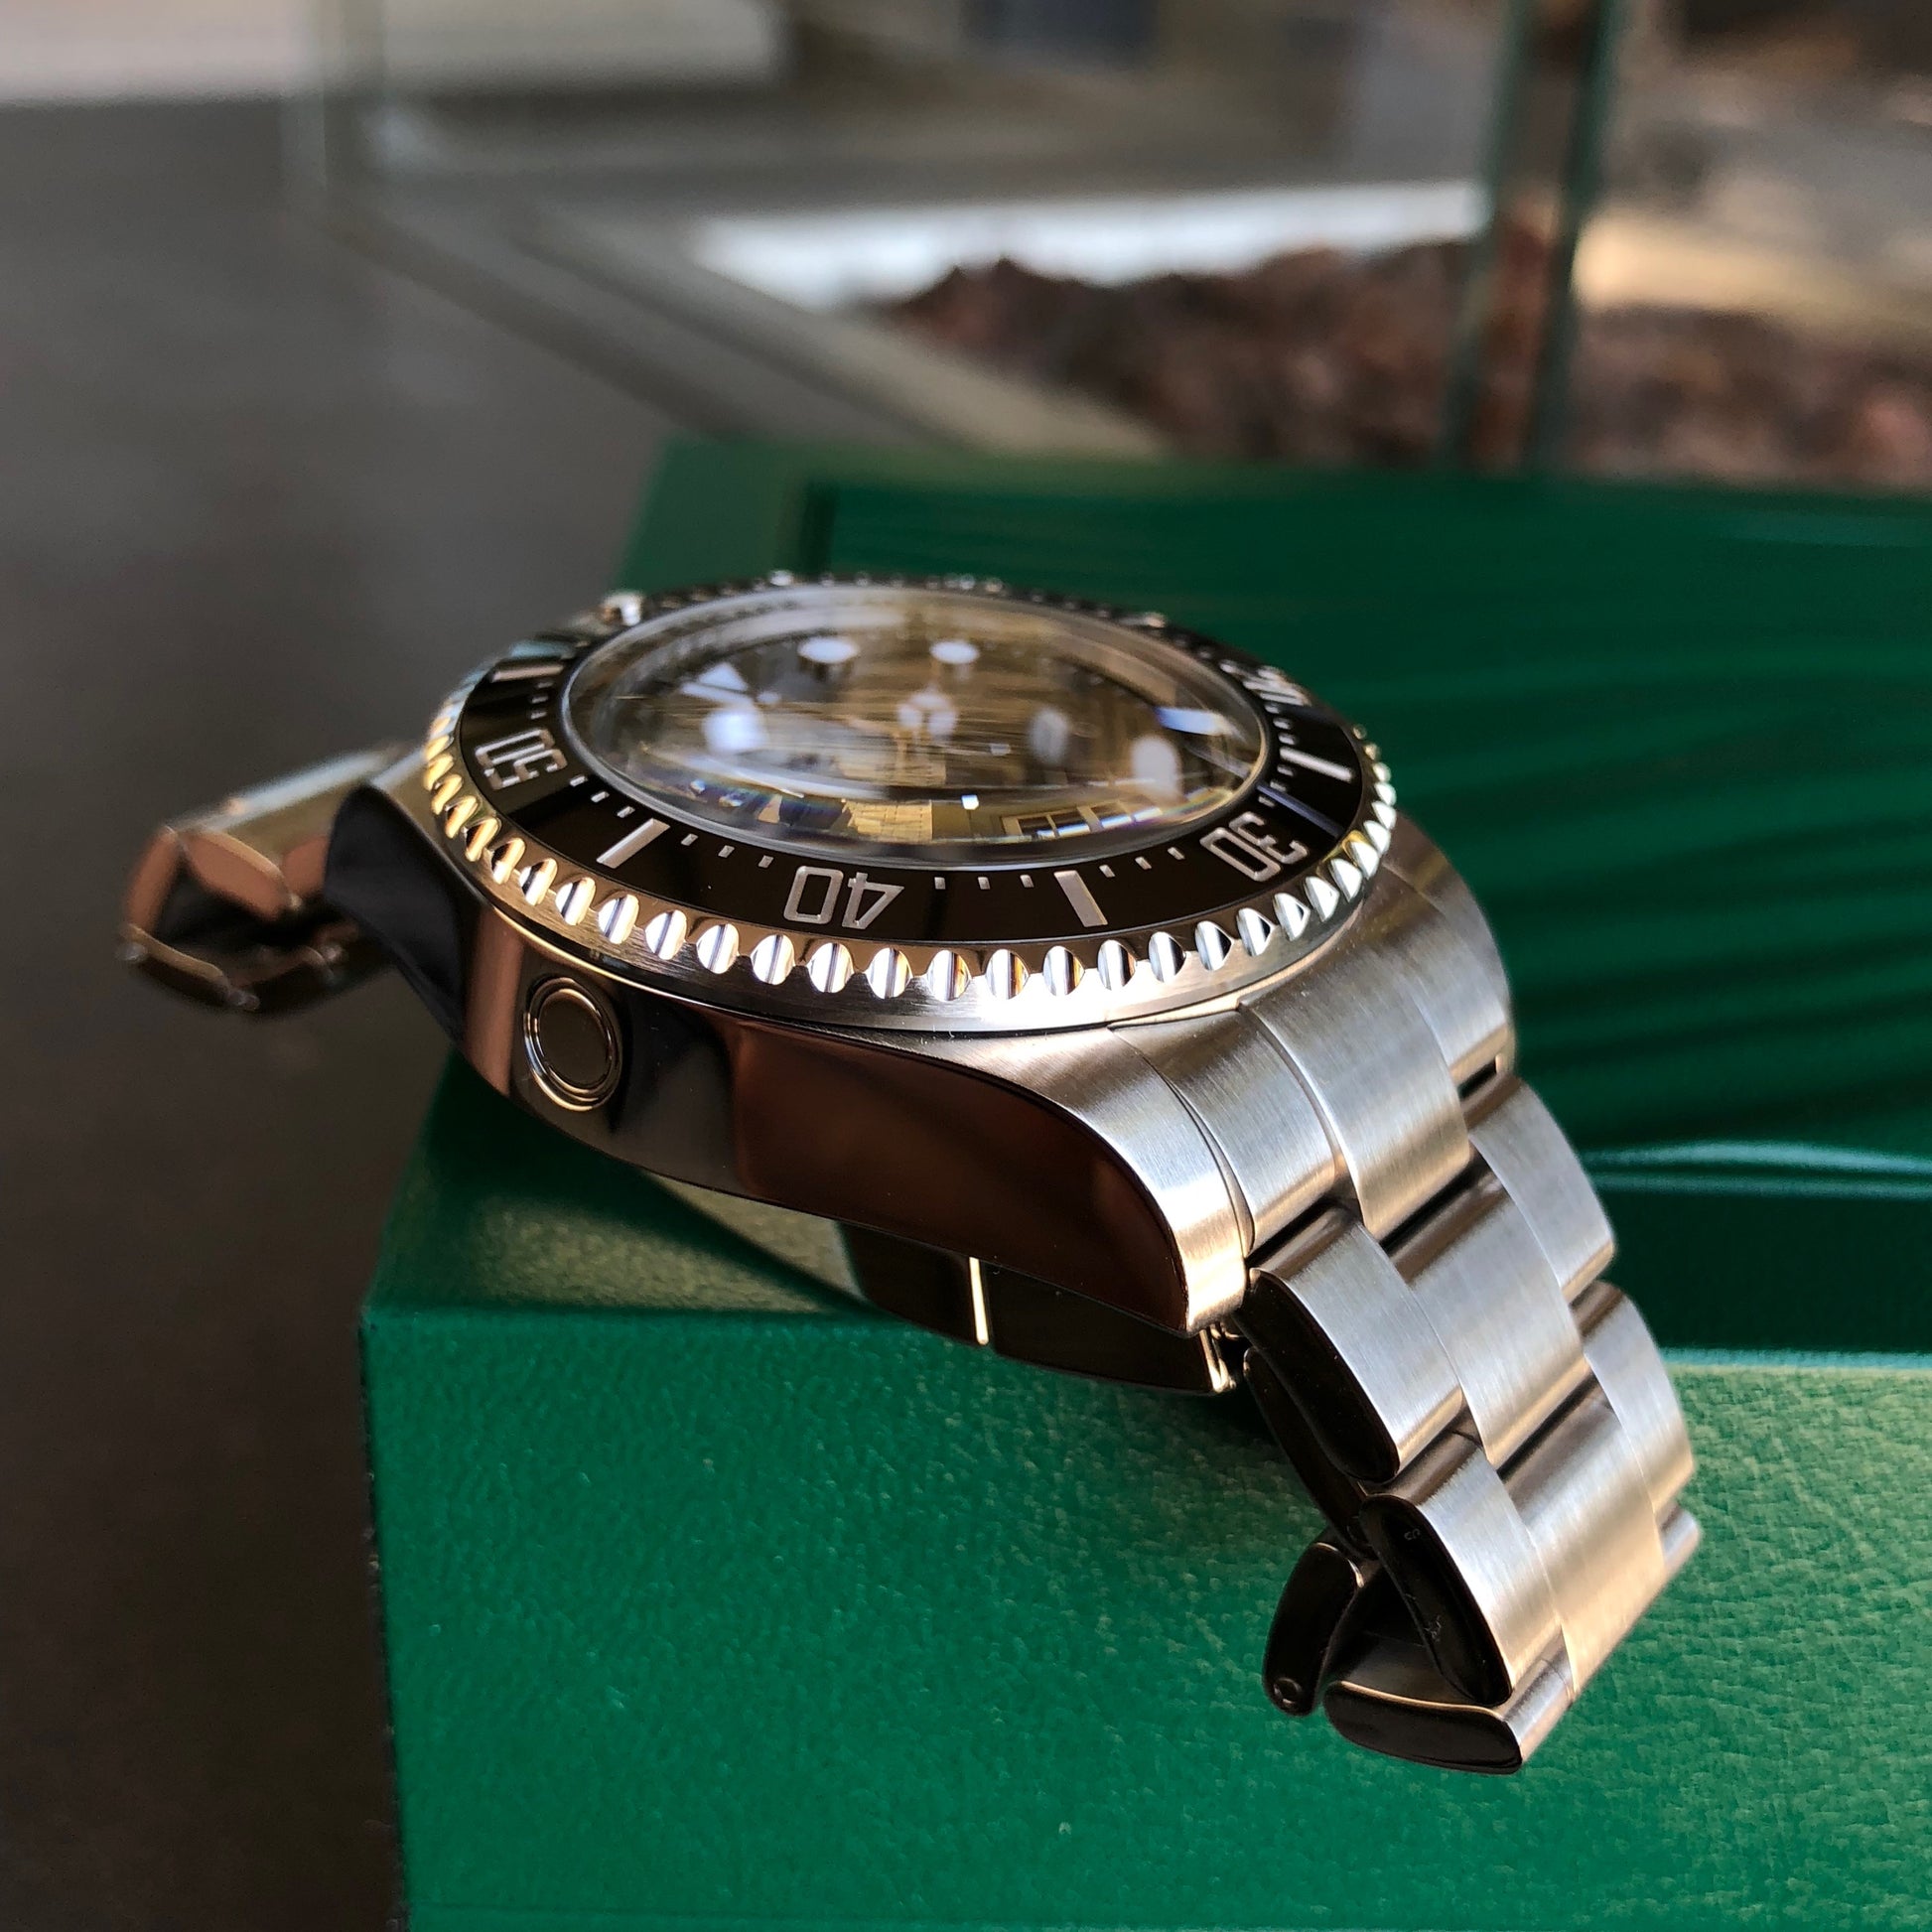 Rolex SEA DWELLER DEEPSEA 116660 Ceramic Mens 44mm Automatic Wristwatch Box & Papers Circa 2016 - Hashtag Watch Company